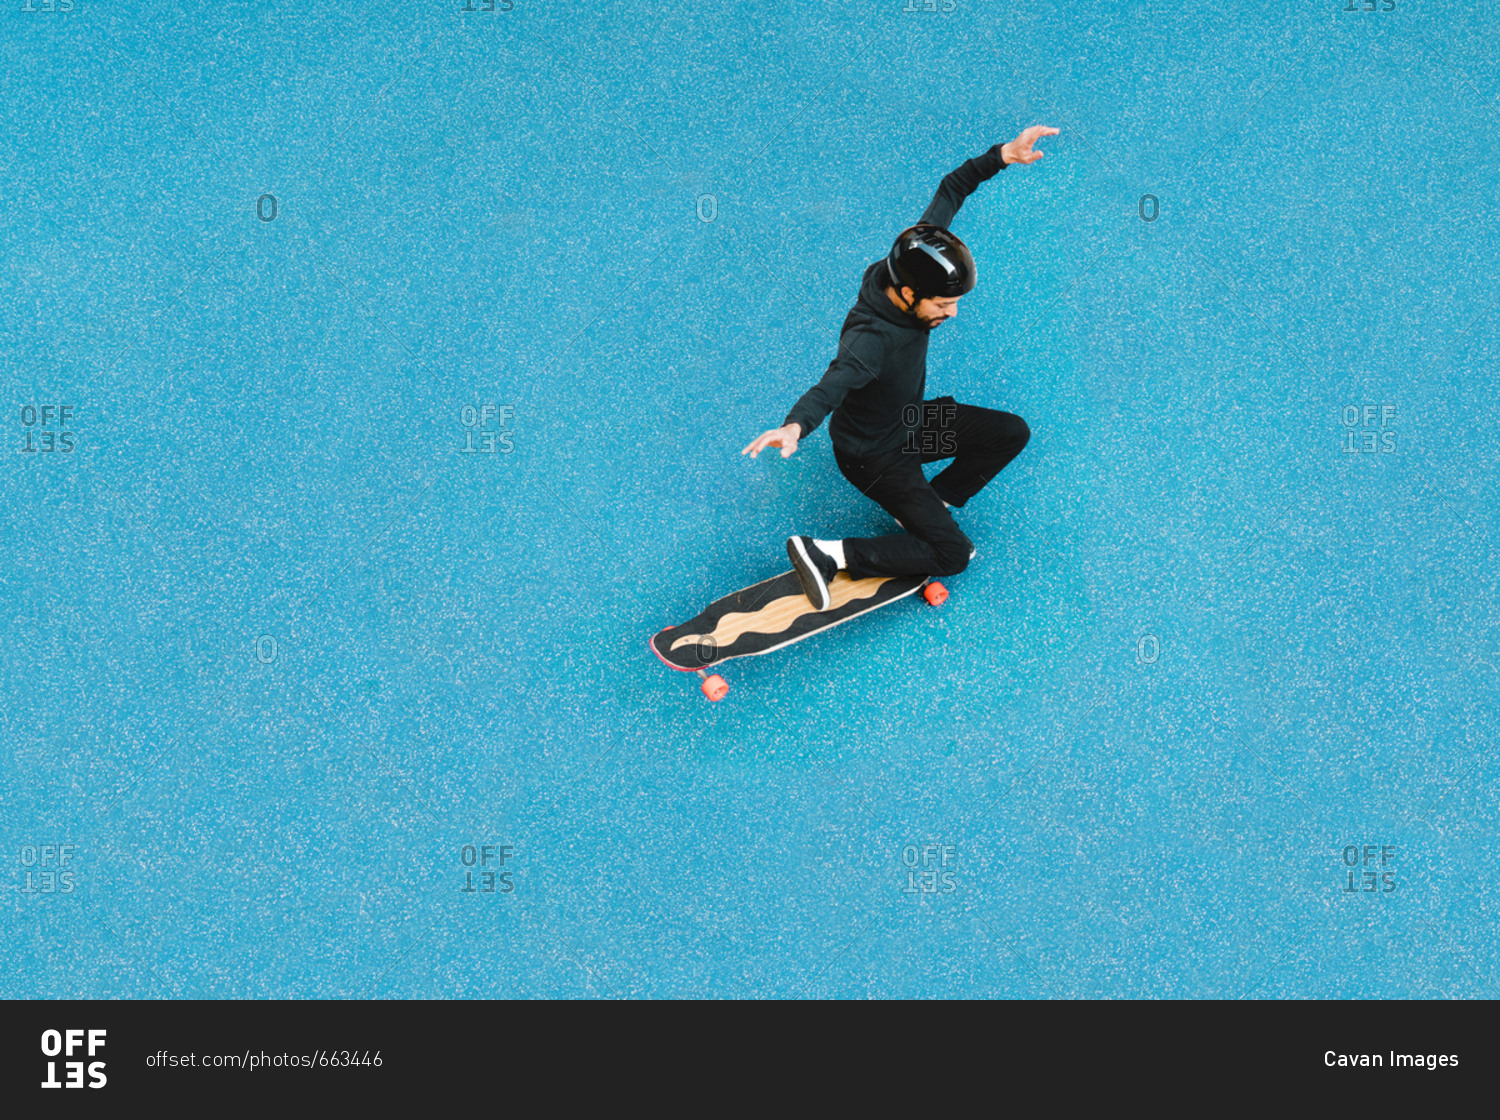 High angle view of man skateboarding on blue floor at skateboard park